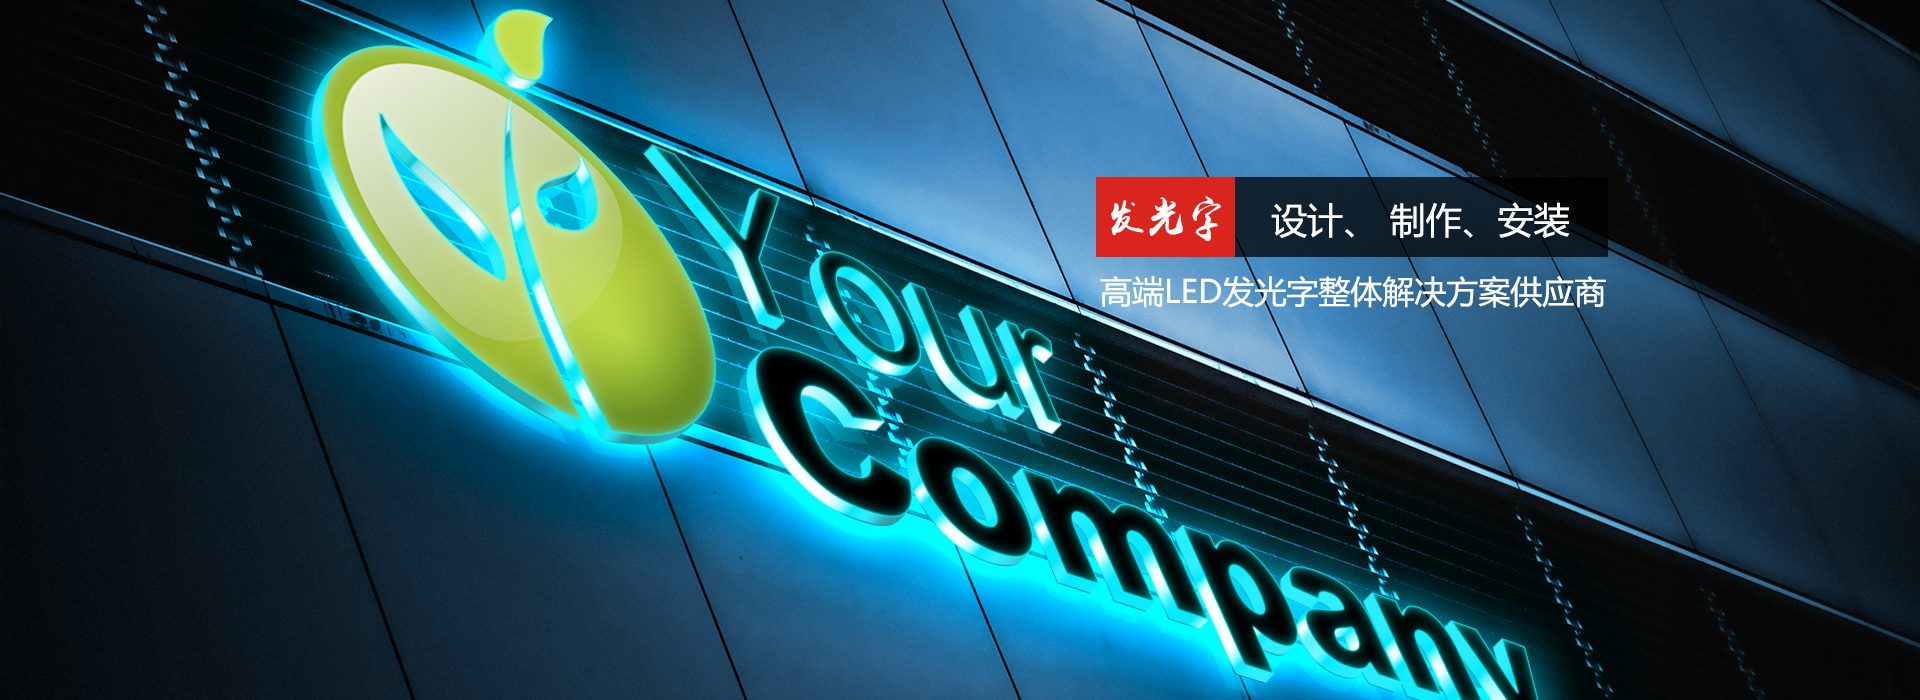 LED发光字,户外广告牌-上海蓄力广告有限公司